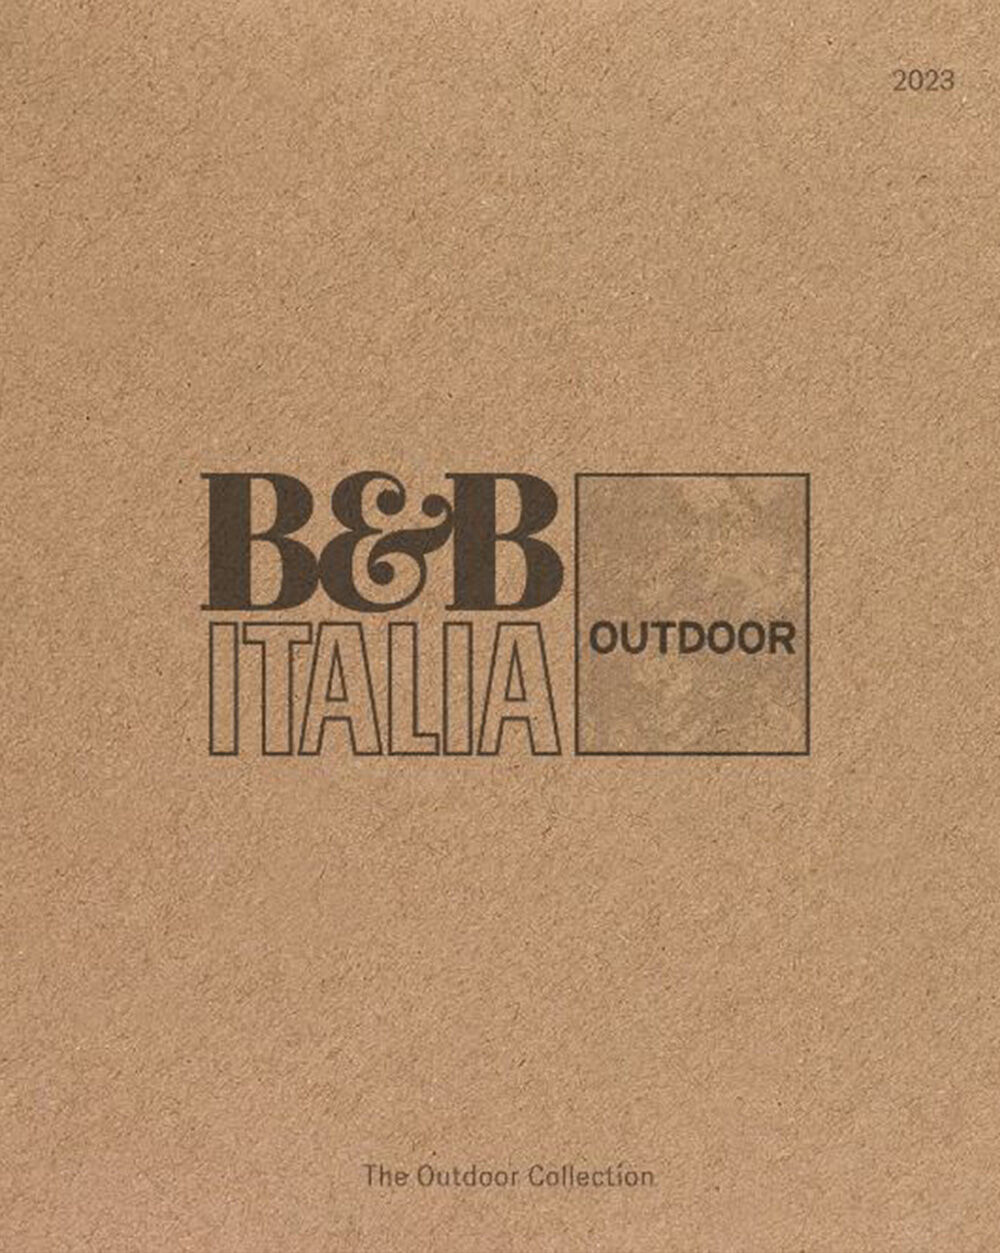 All B&B Italia catalogs and technical brochures